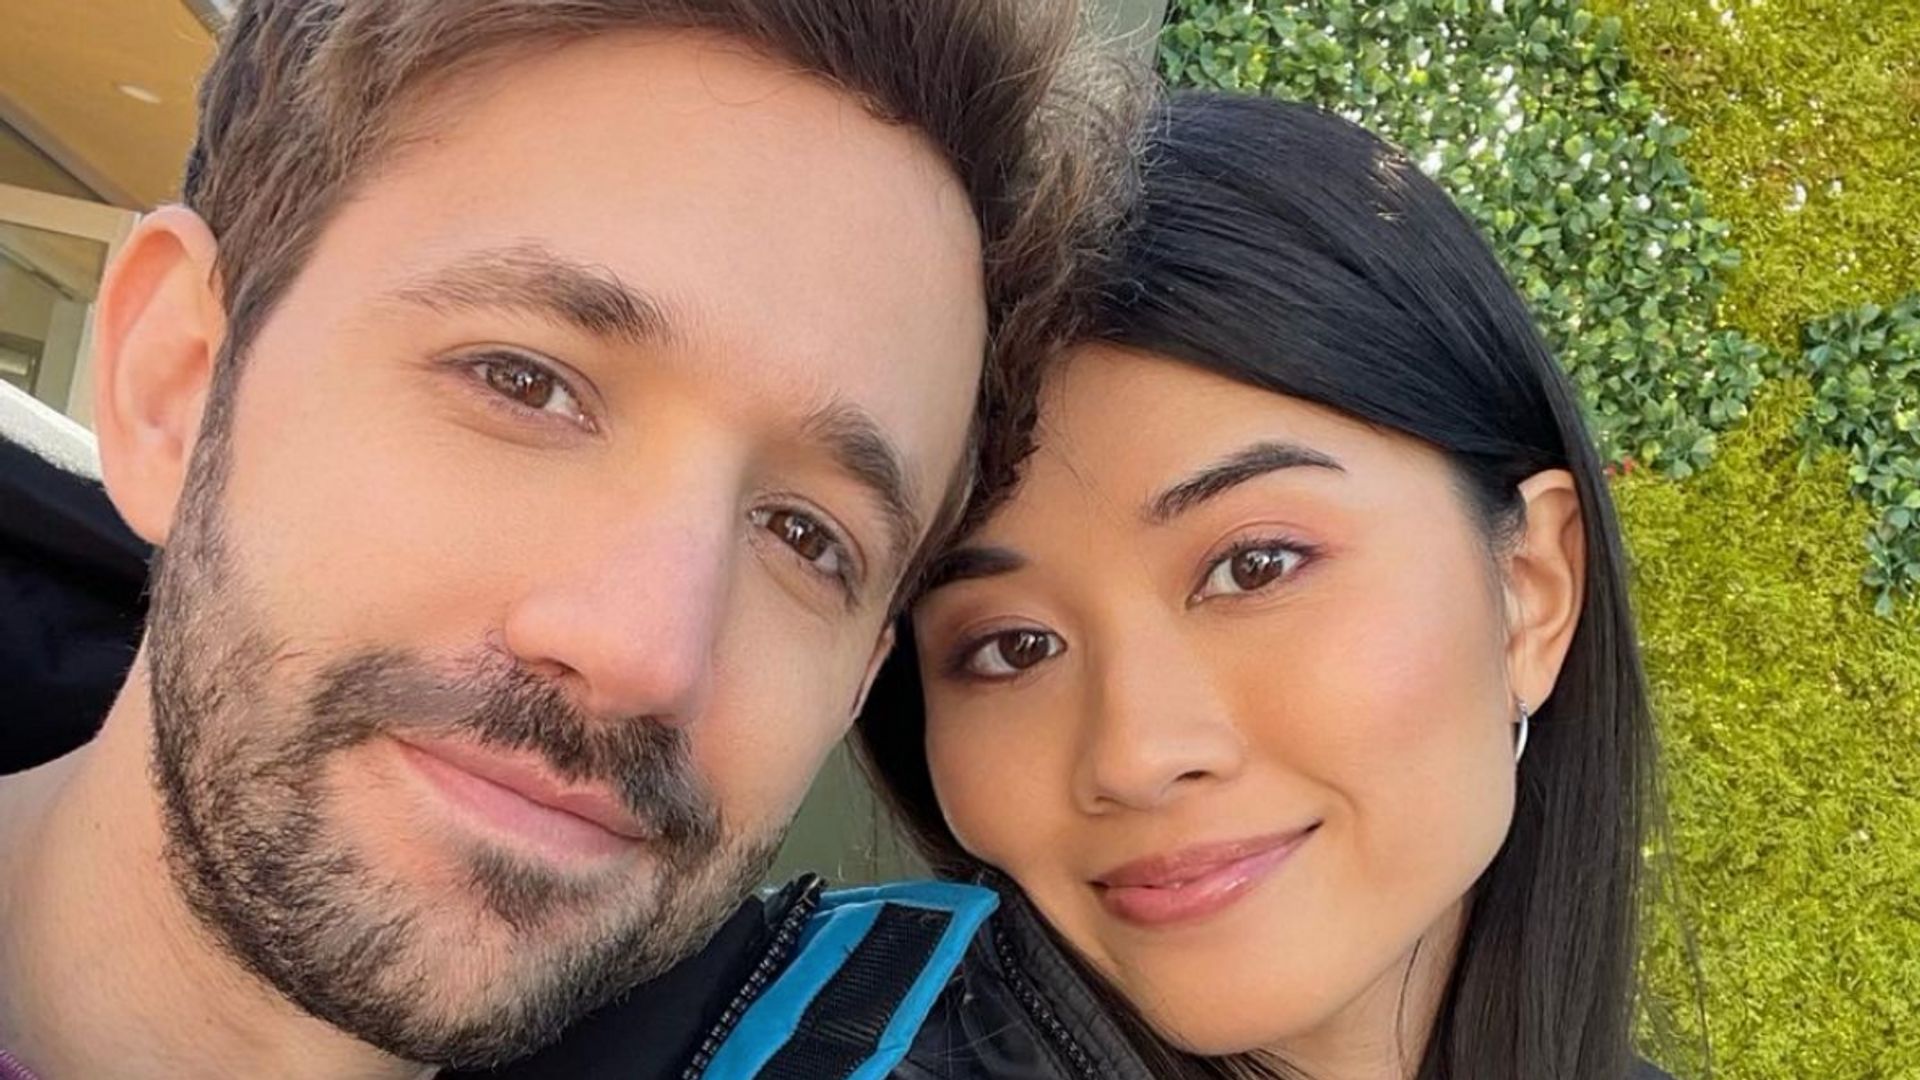 Photo shared by David Lautman on Instagram posing with his now fiancée Megan Li Wang